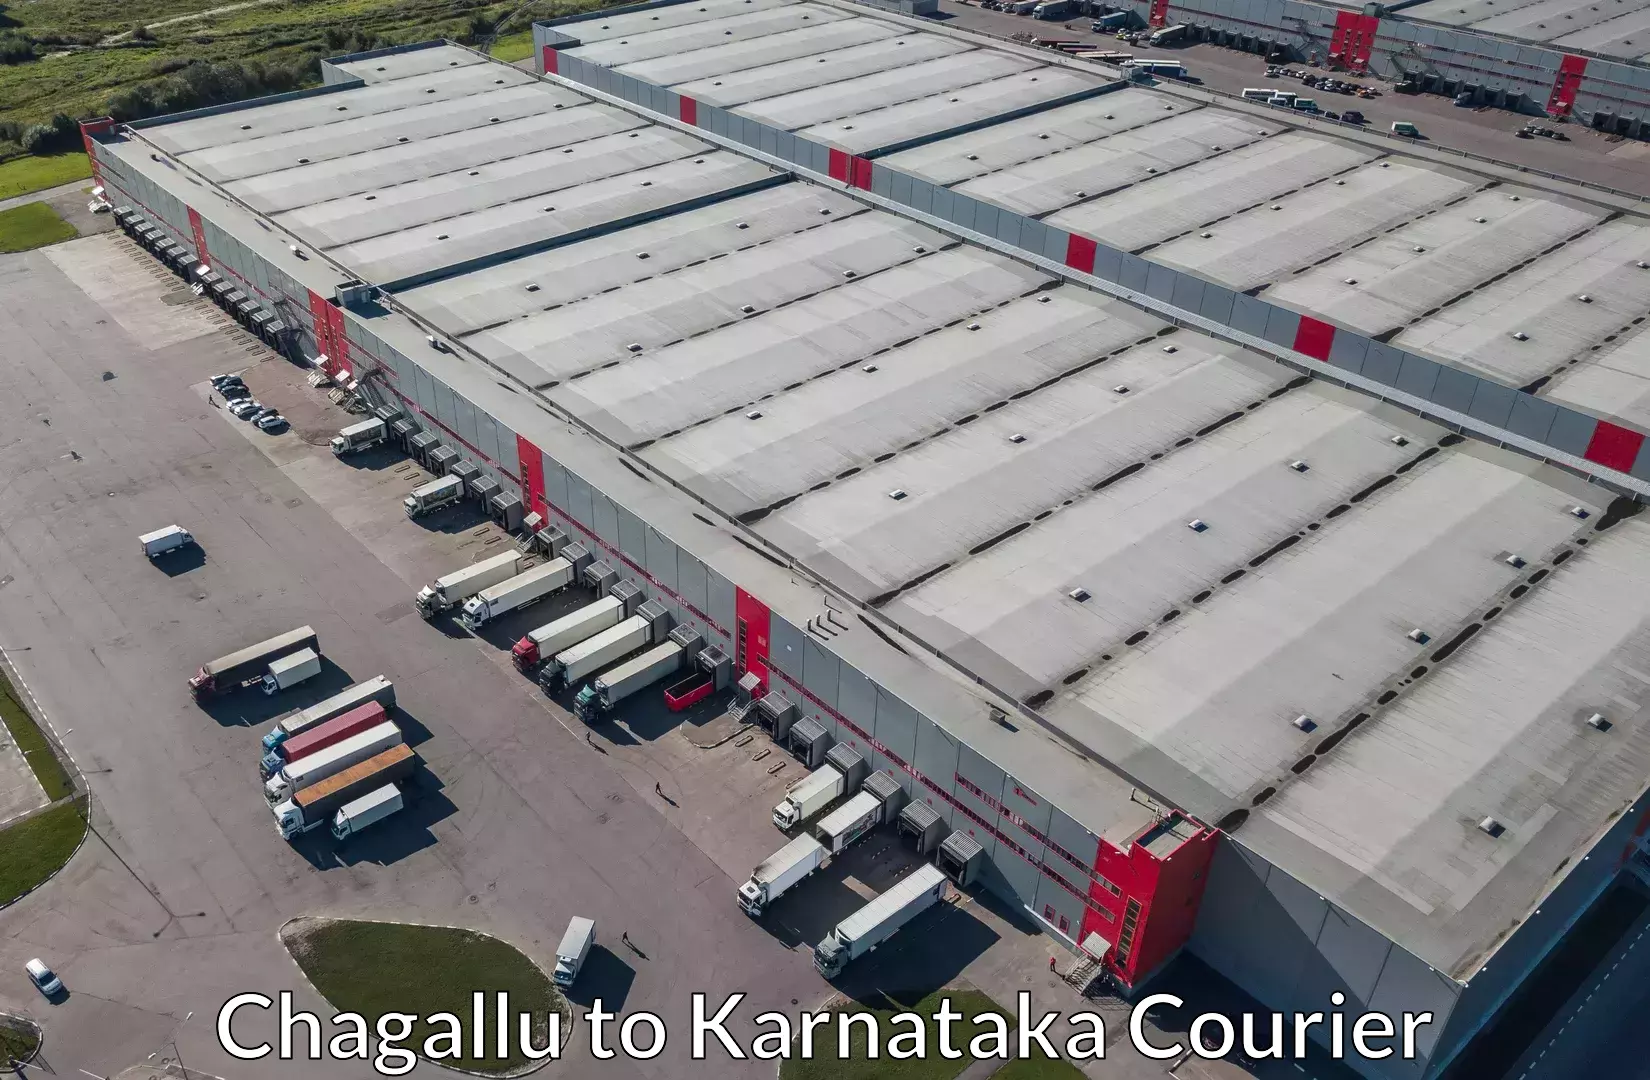 Quality moving company Chagallu to Karnataka